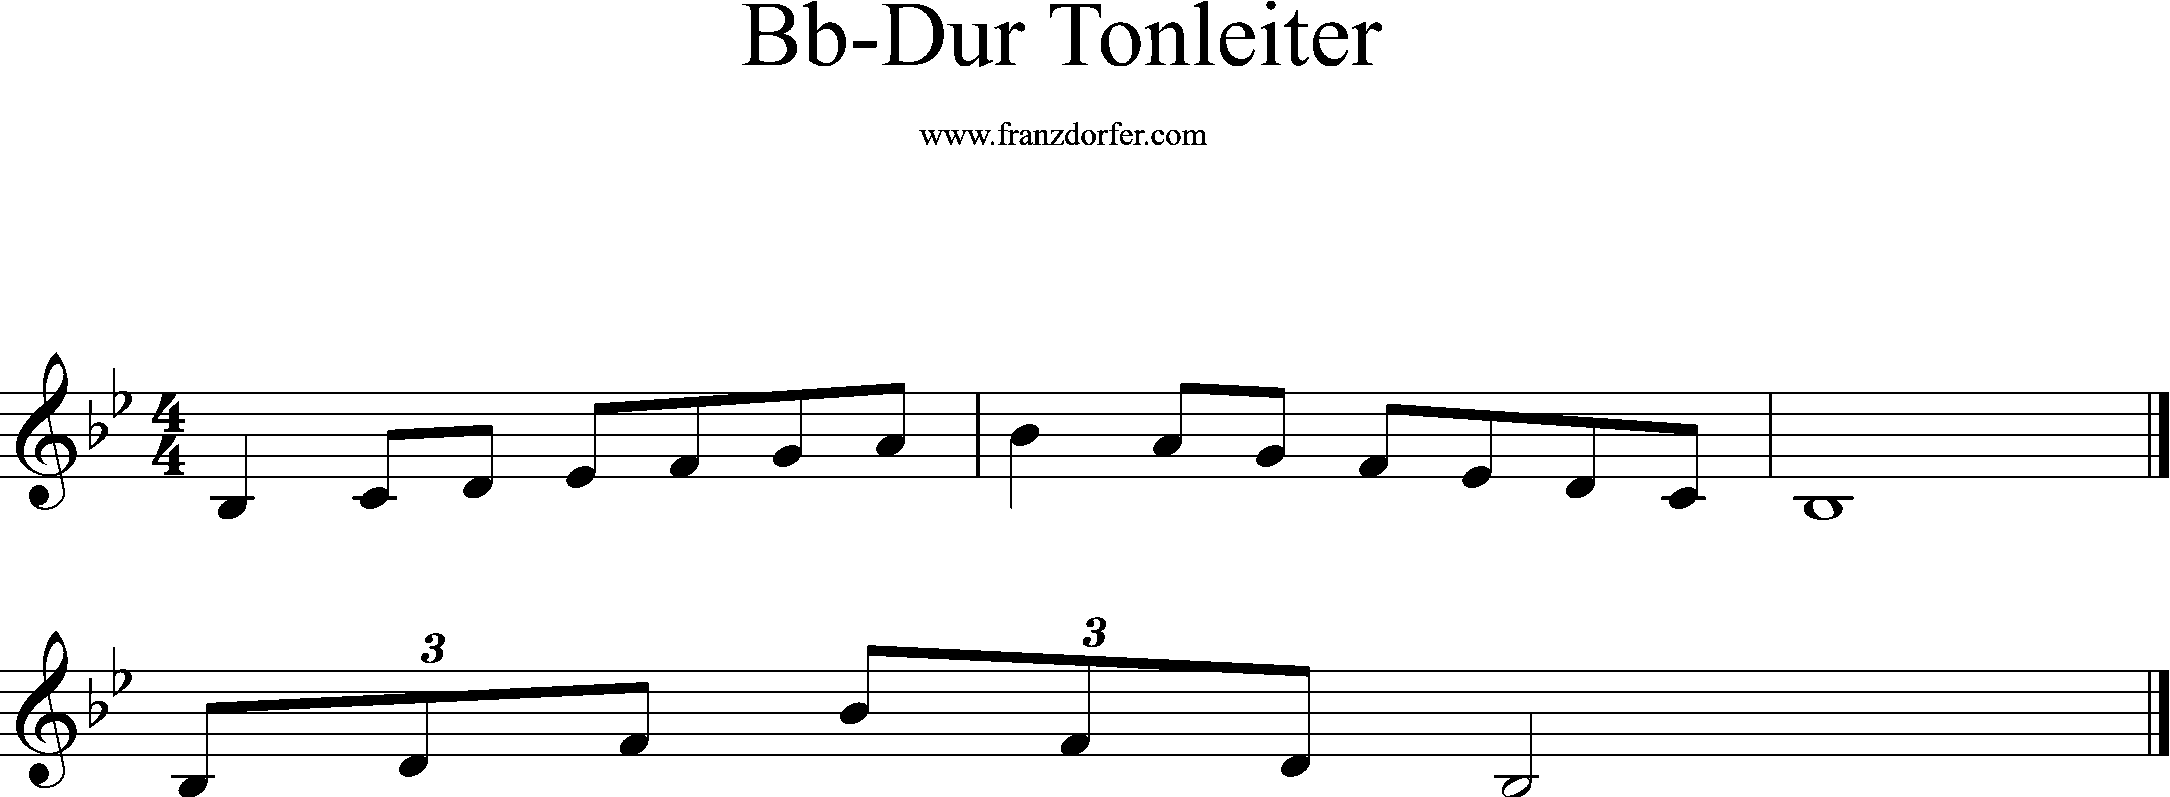 bb-dur tonleiter, violinschlüssel, tiefe oktav, bb0-bb1